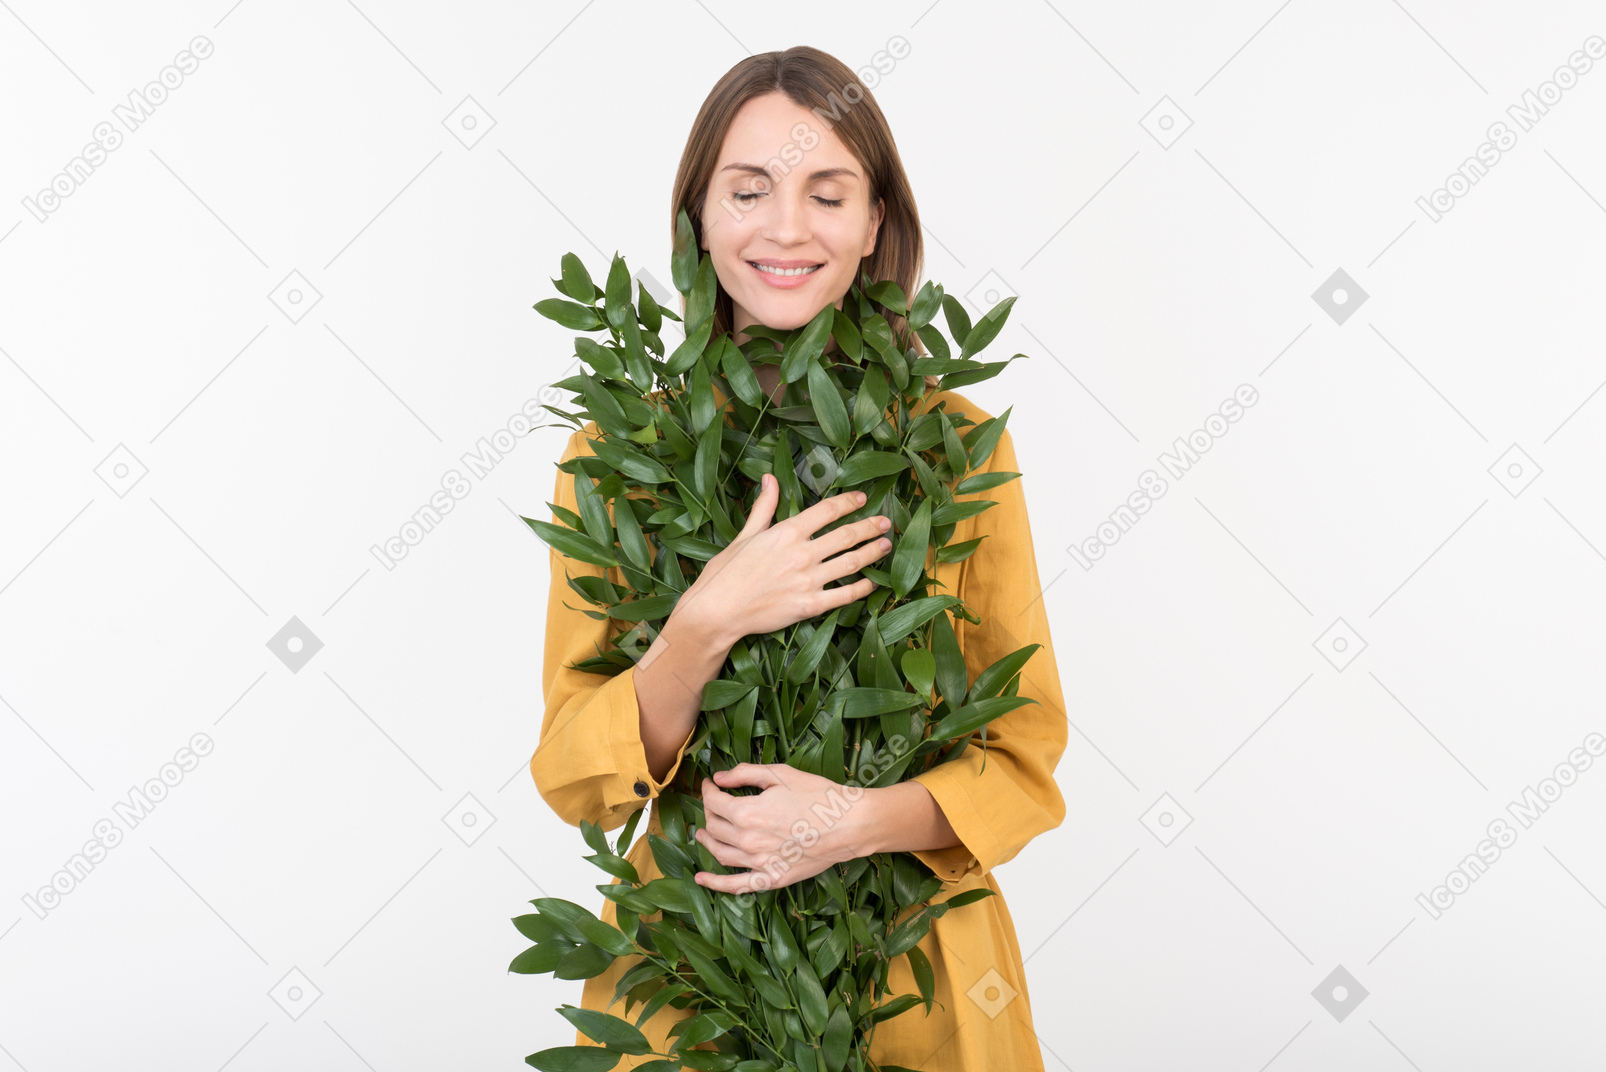 Jovem abraçando ramos verdes